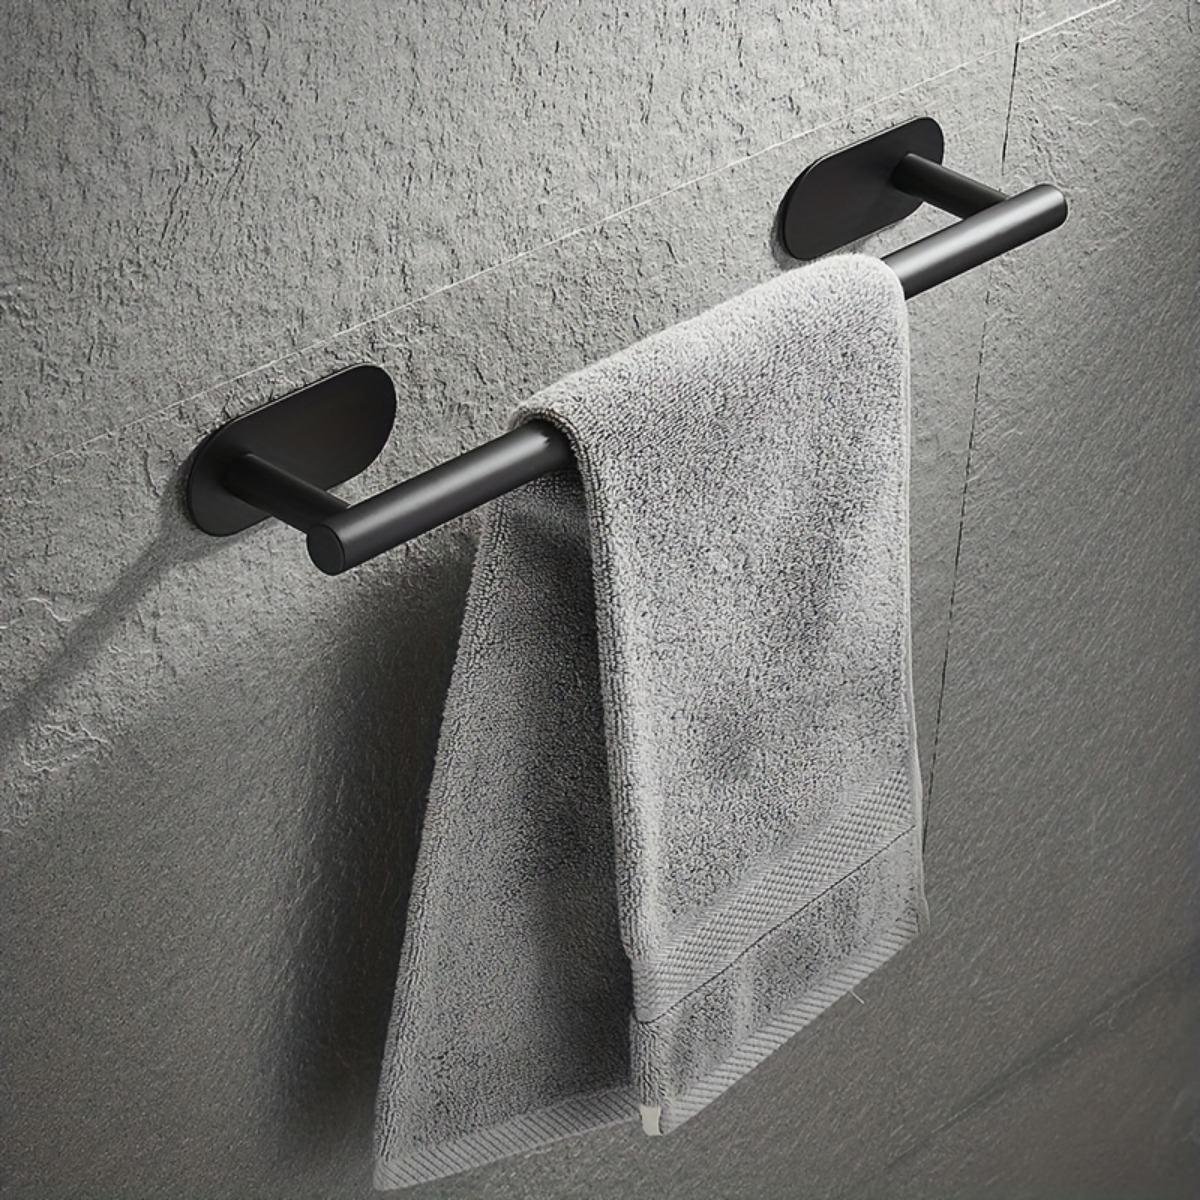 1pc Stainless Steel Toilet Paper Holder, Self Adhesive Bathroom Towel Bar,  Wall Mounted Towel Hanger, Bathroom Accessories